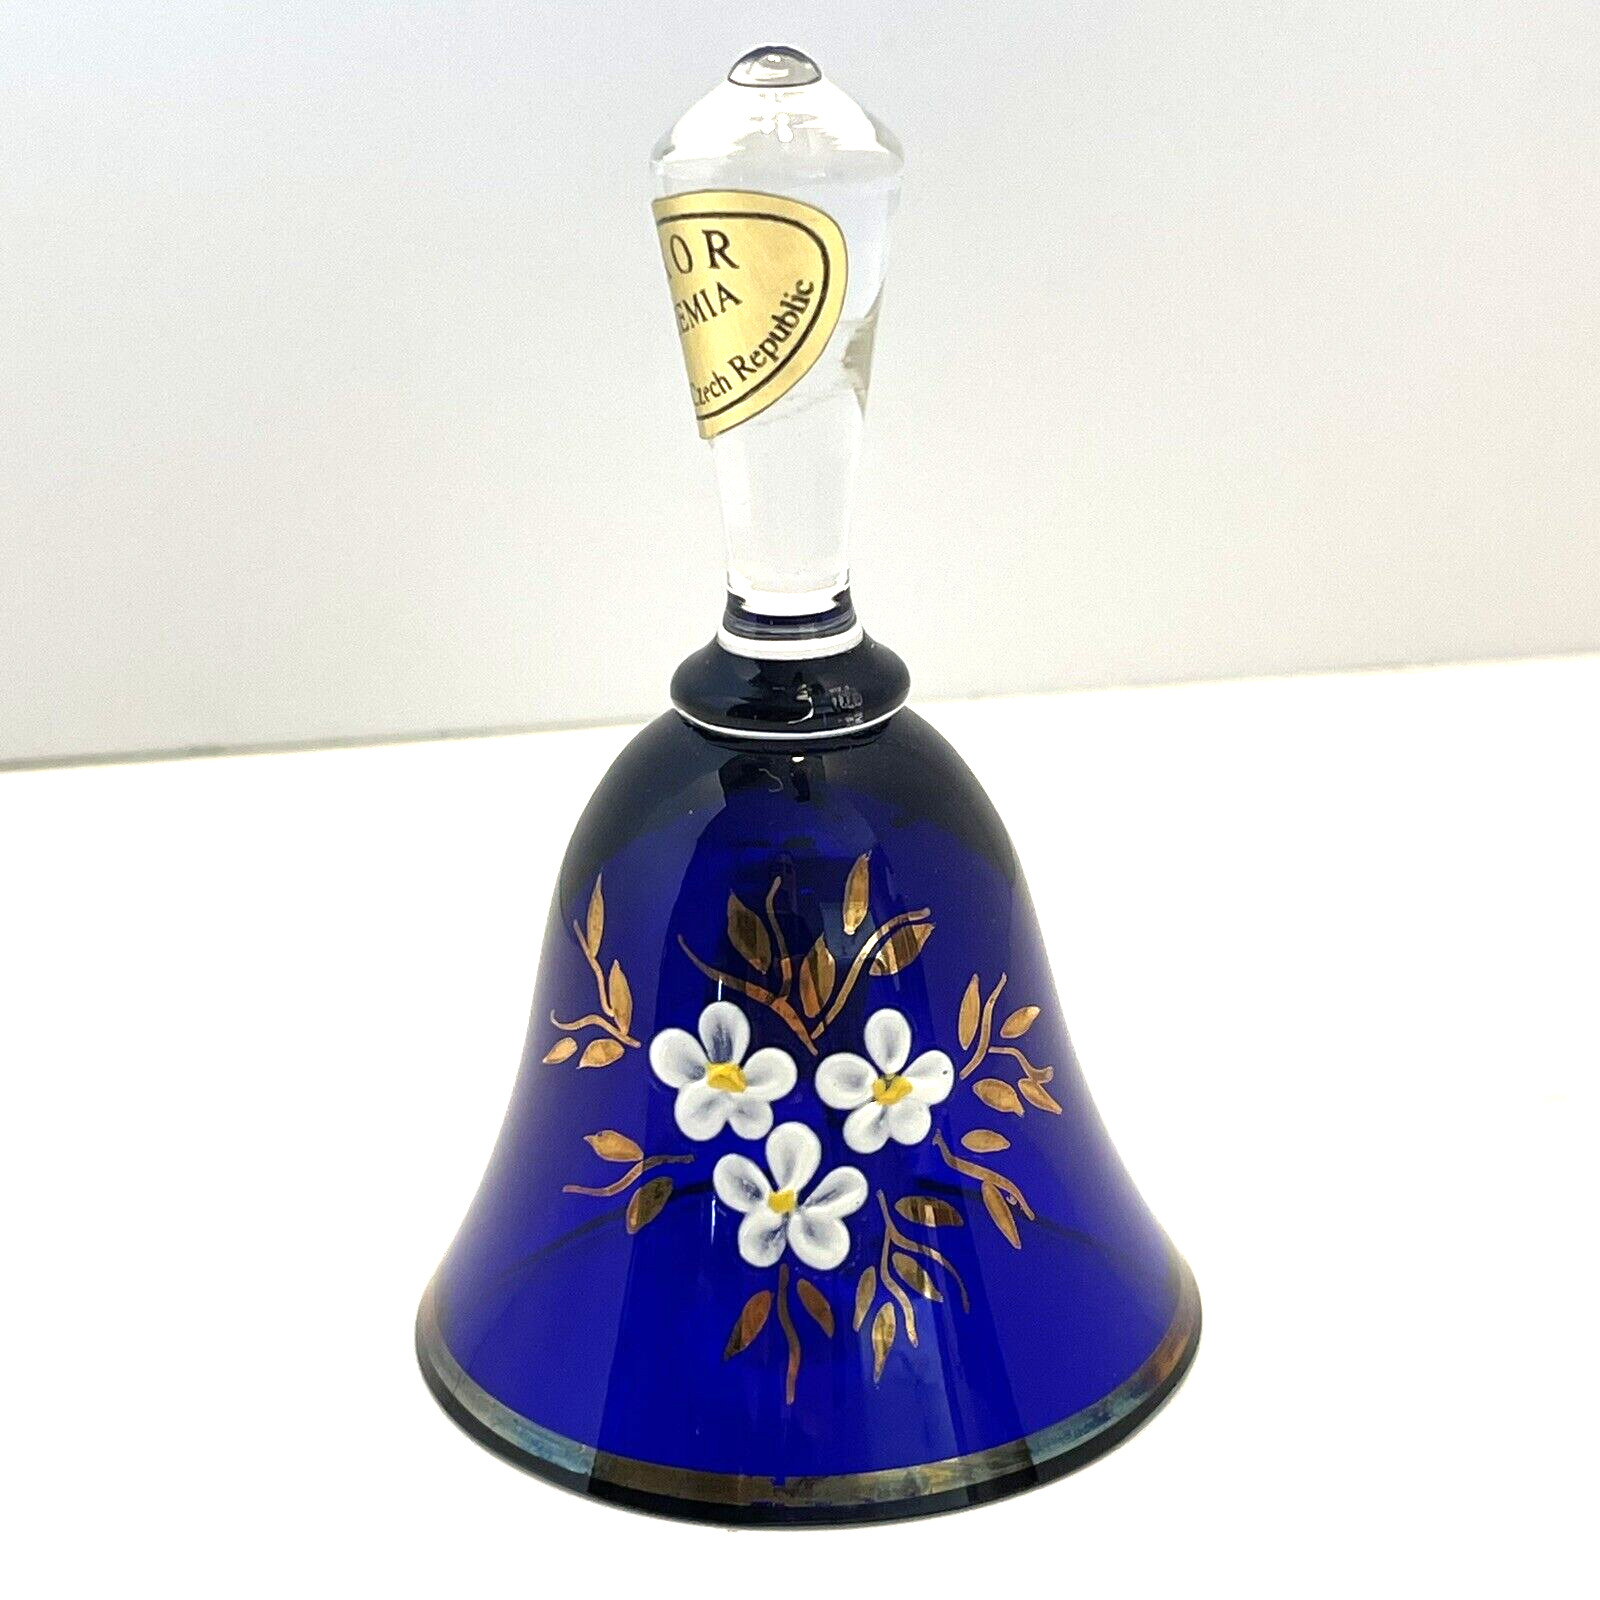 Luxor Bohemian Glass Bell Cobalt Blue Gold Hand Painted Flowers A. Ruckl & Sons